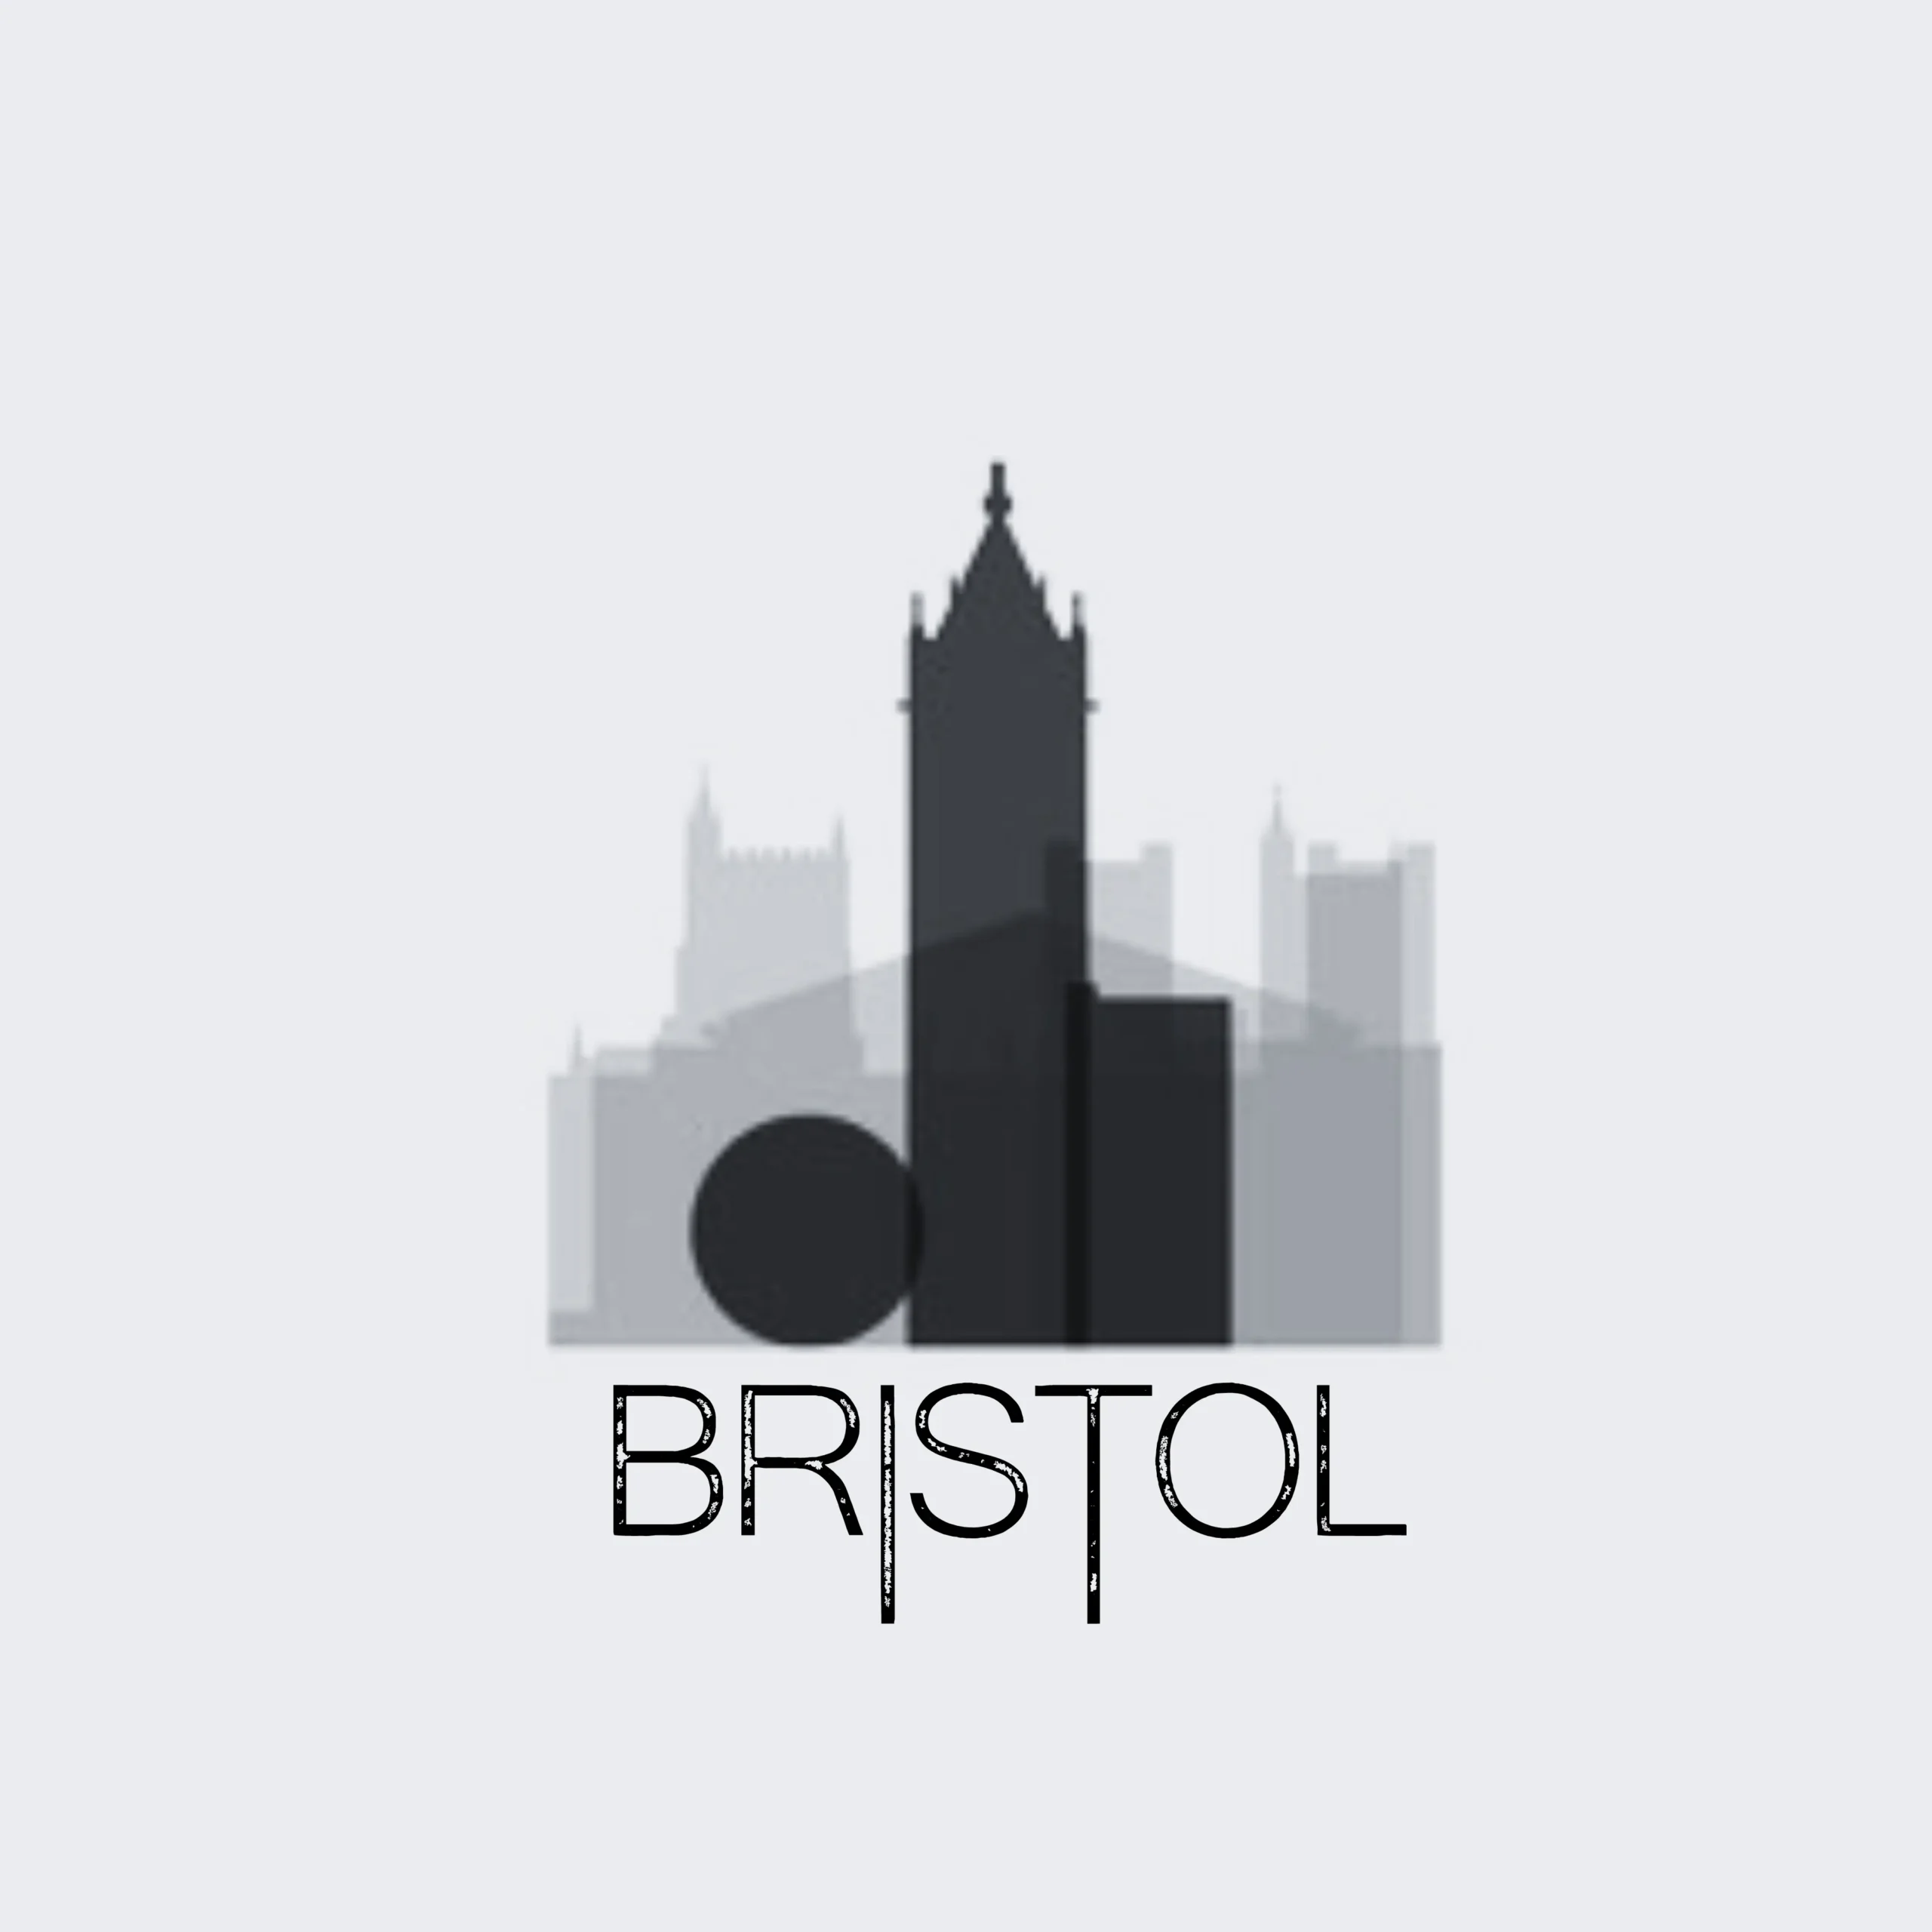 Bristol city skyline